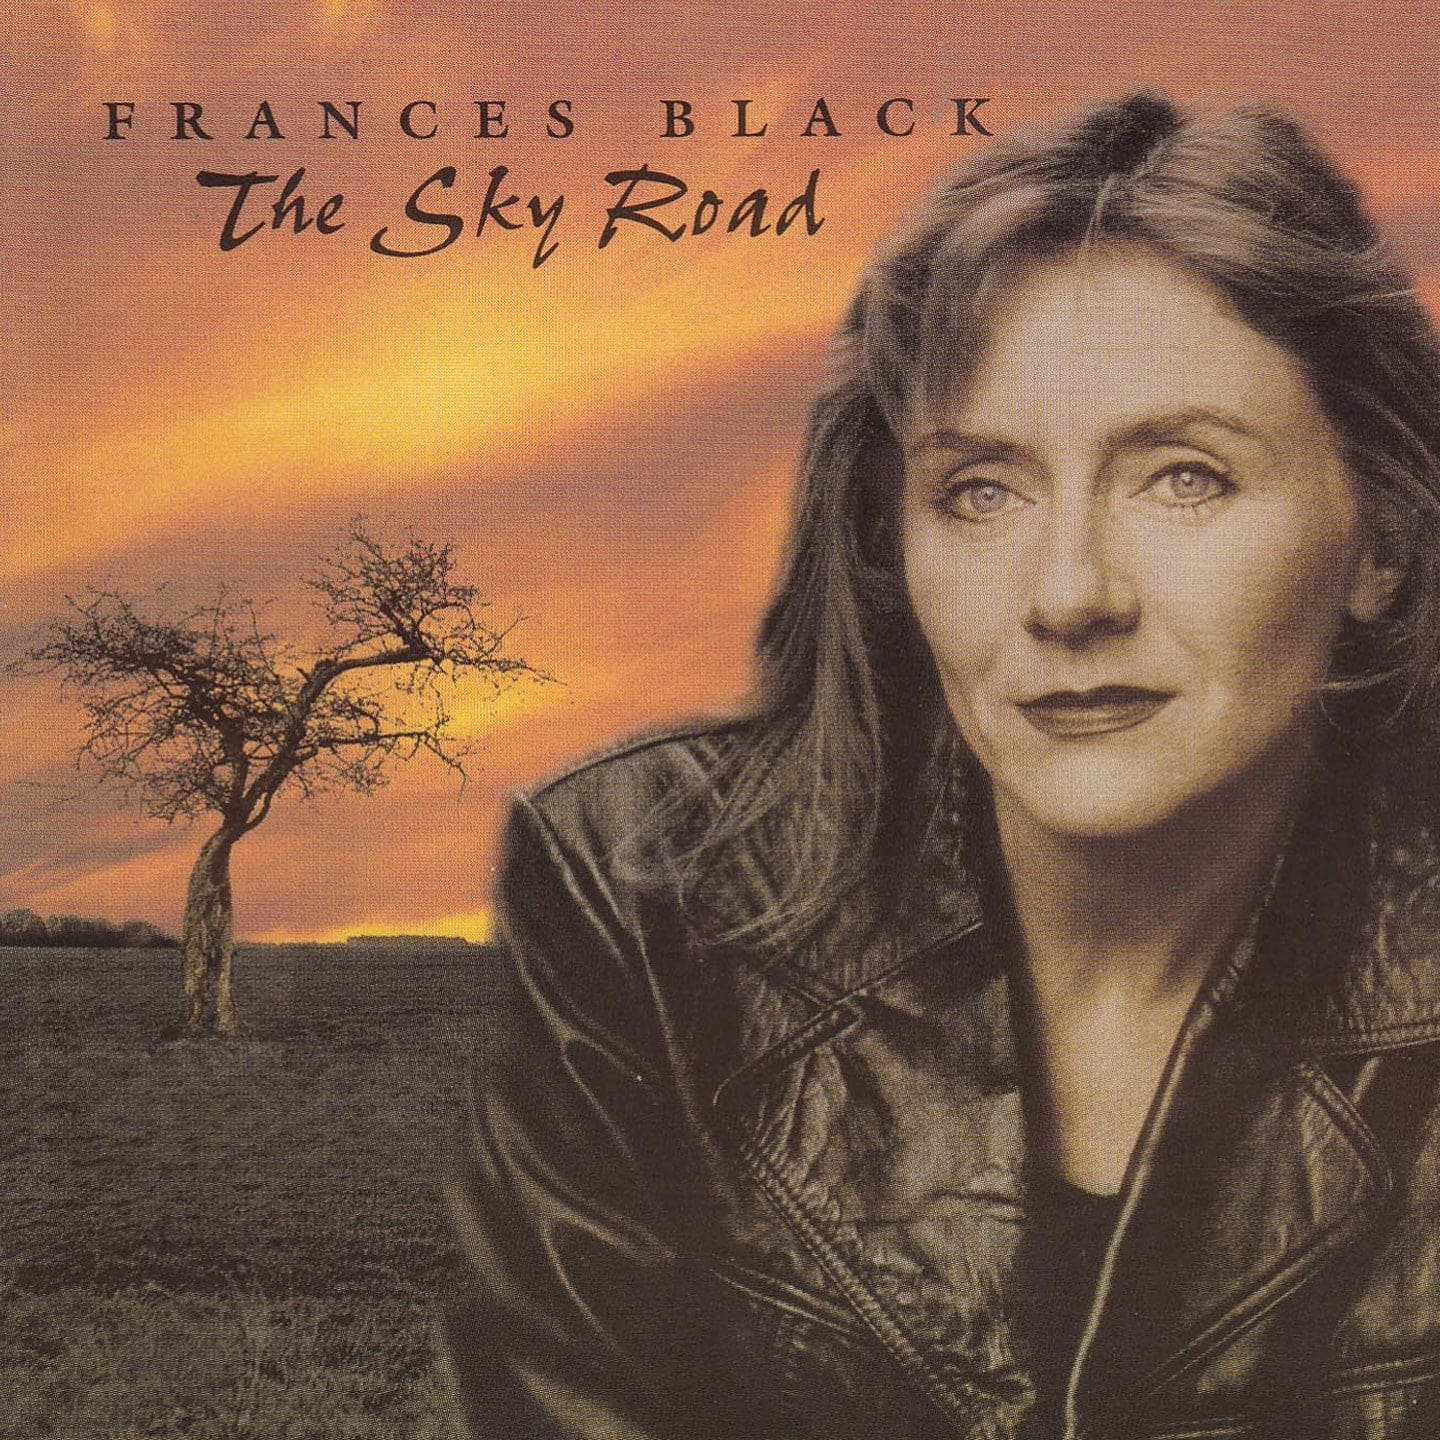 The Sky Road - Frances Black [CD]